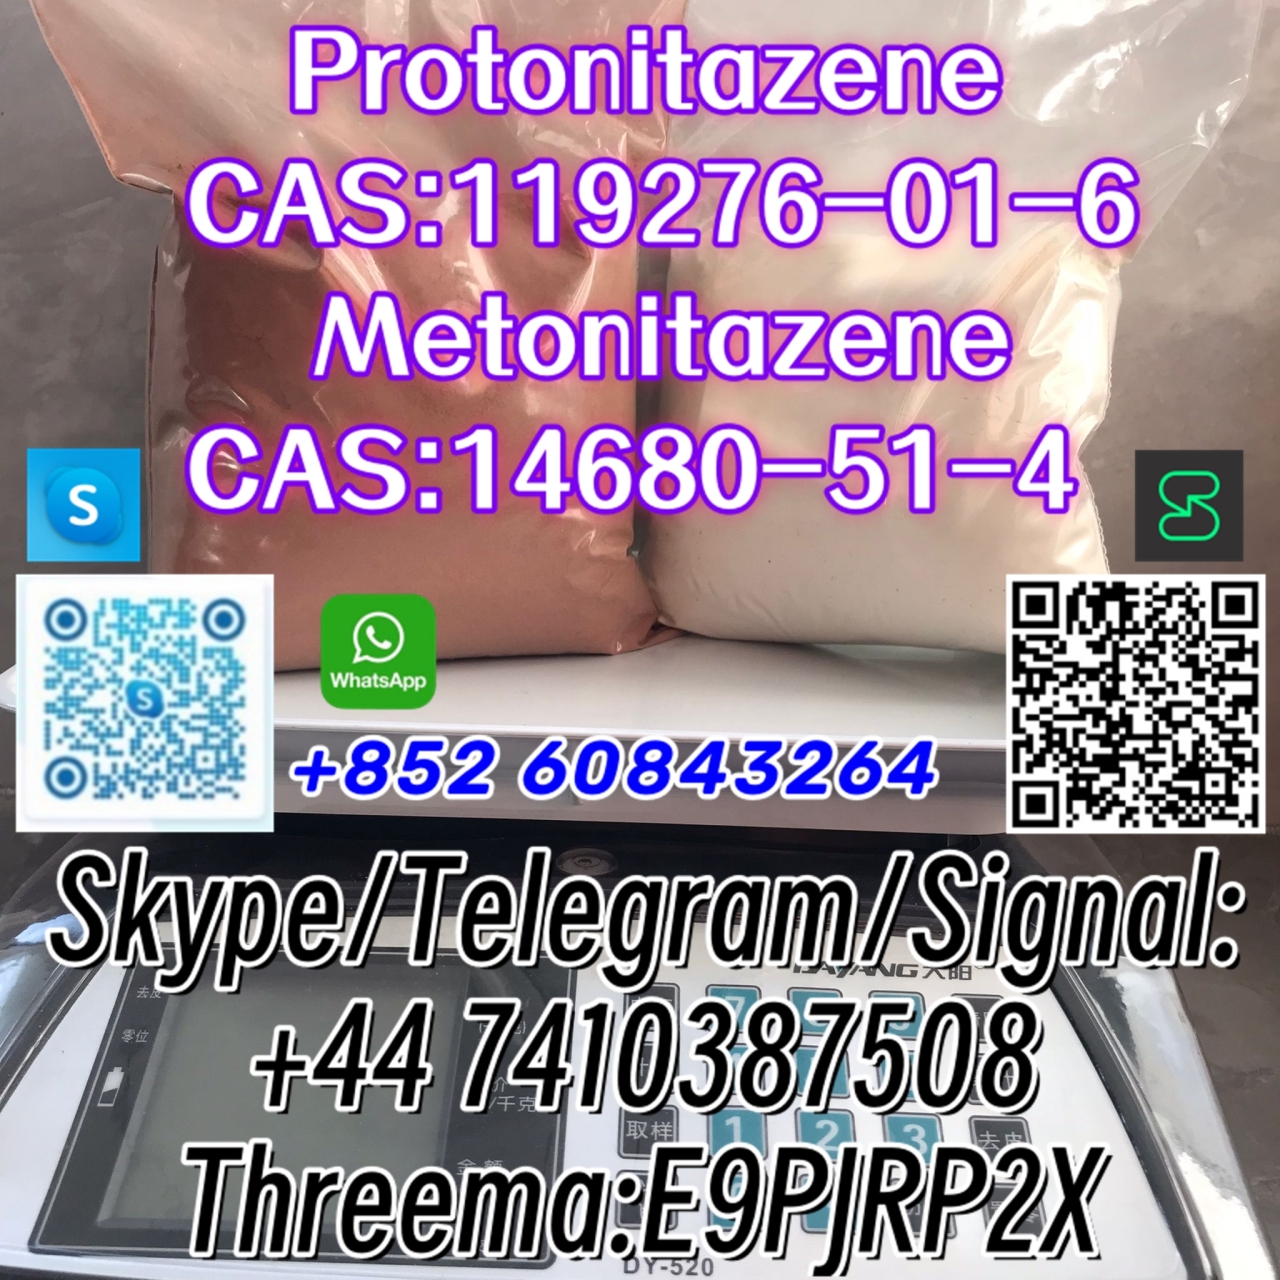 Protonitazene CAS:119276-01-6 Metonitazene CAS:14680-51-4 Skype/Telegram/Signal: +44 7410387508 Threema:E9PJRP2X-1 24.04.2024 - Protonitazene CAS:119276-01-6
Metonitazene CAS:14680-51-4    Skype/Telegram/Signal:
+44 7410387508
Threema:E9PJRP2X